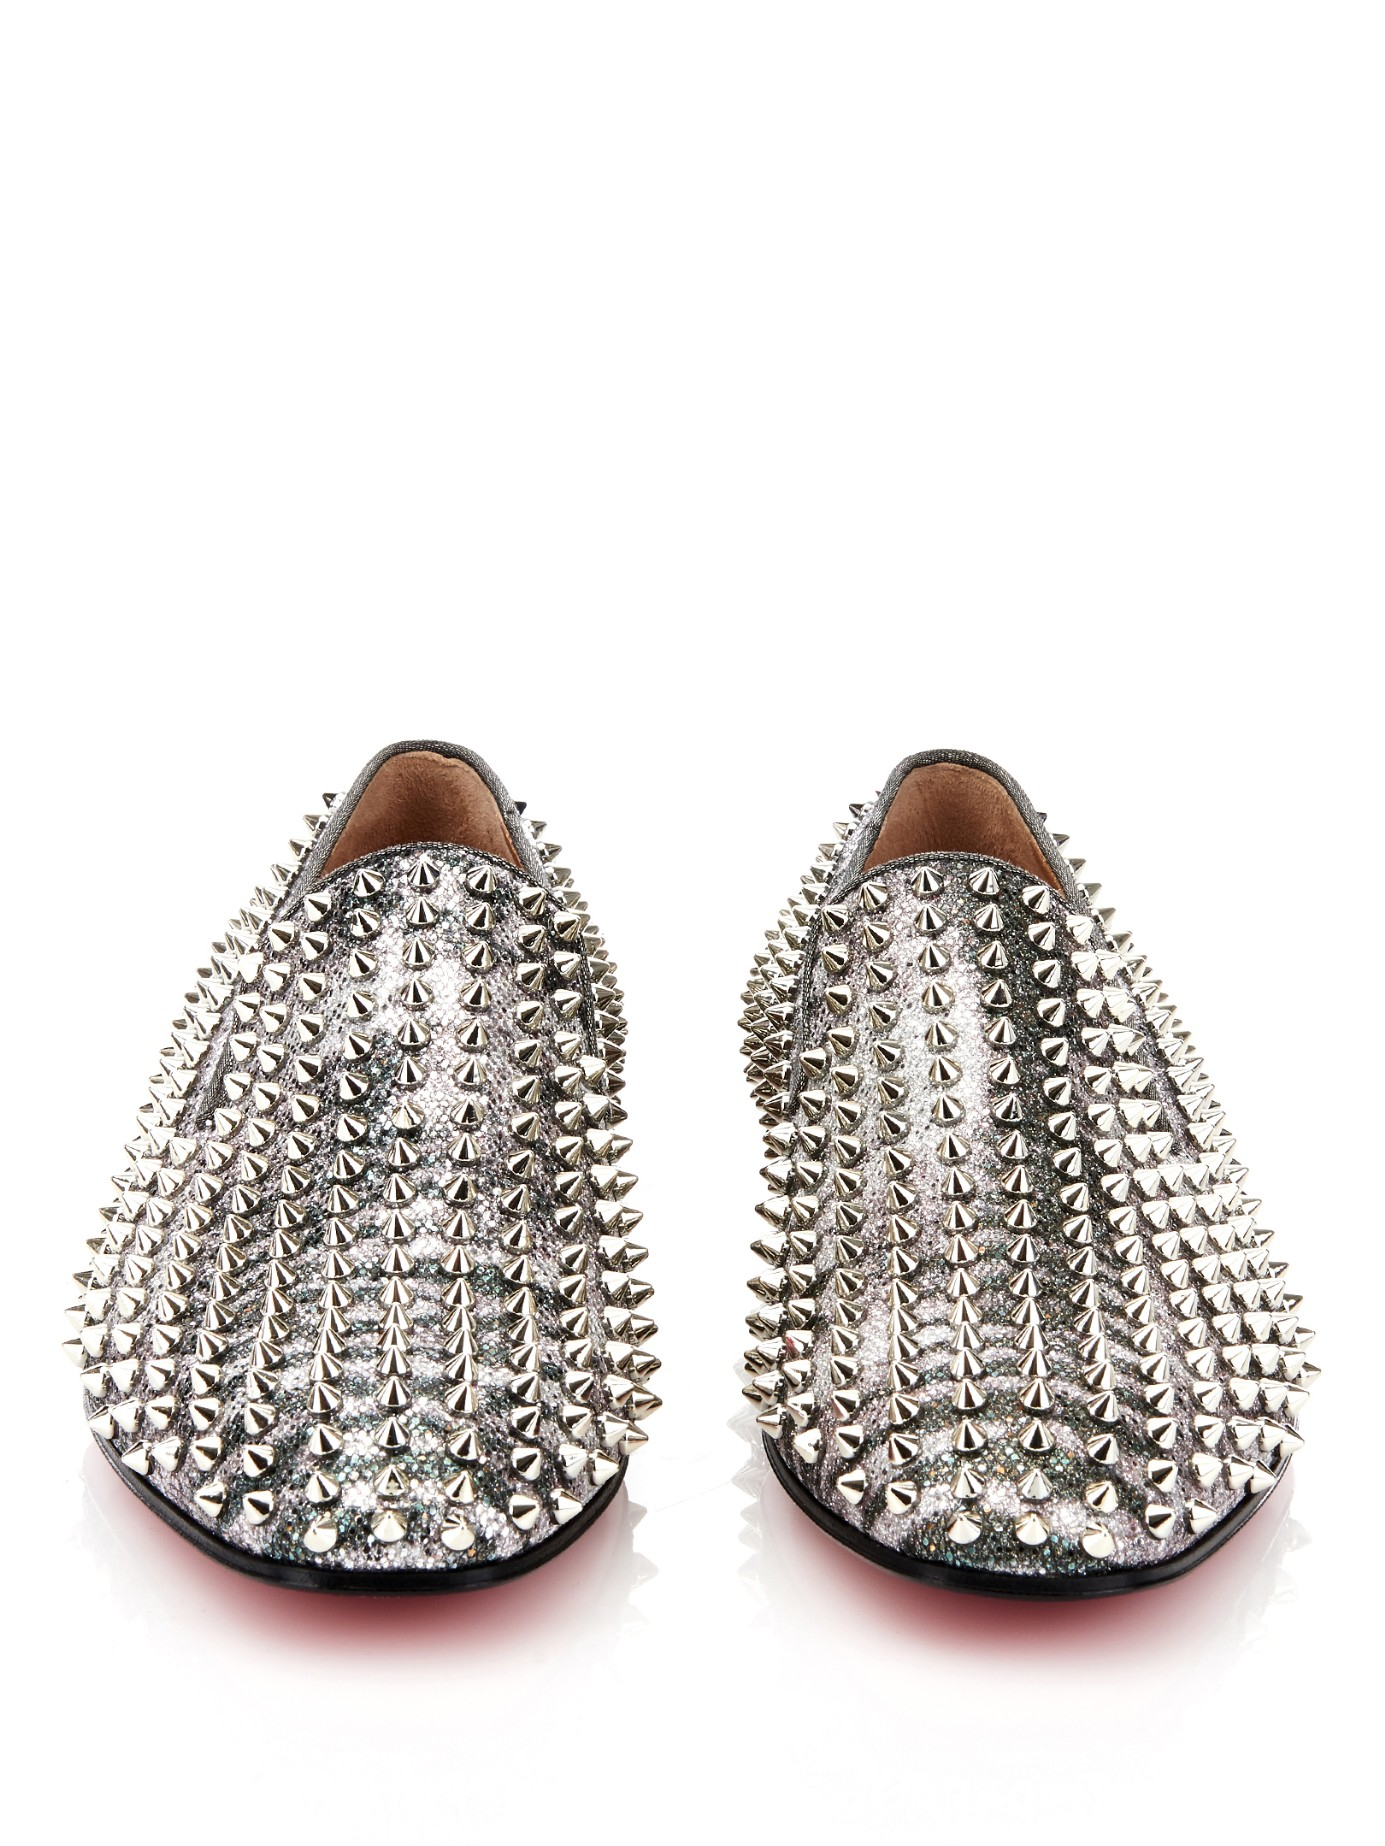 Men's Christian Louboutin Tassilo Flat Glitter Loafers Review